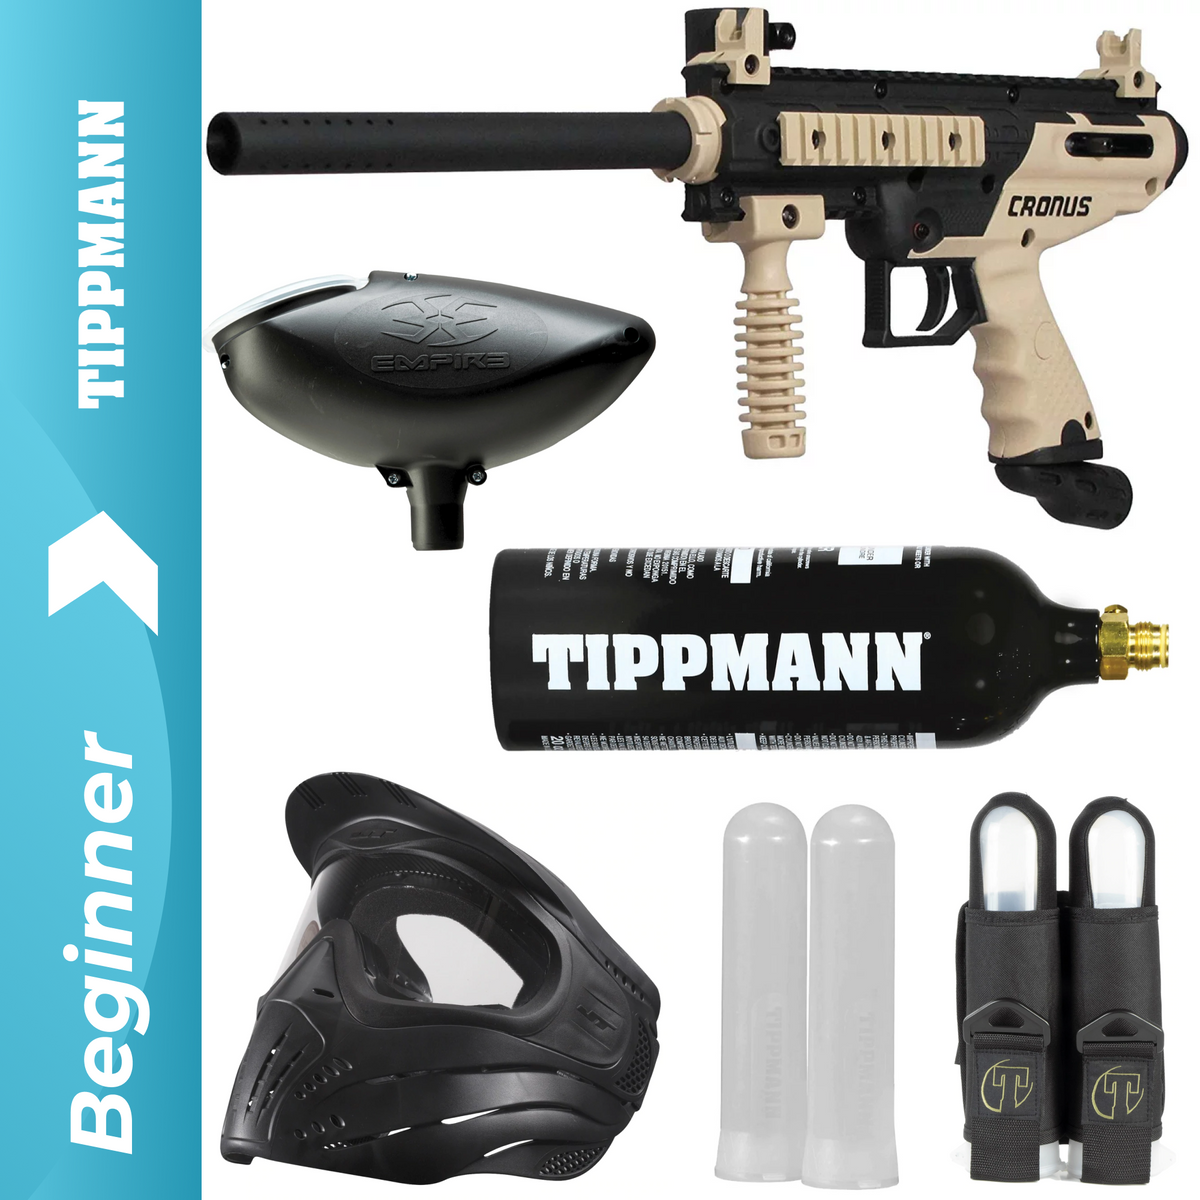 Tippmann Cronus Powerpack Paintball Gun Kit | Co2 Tank